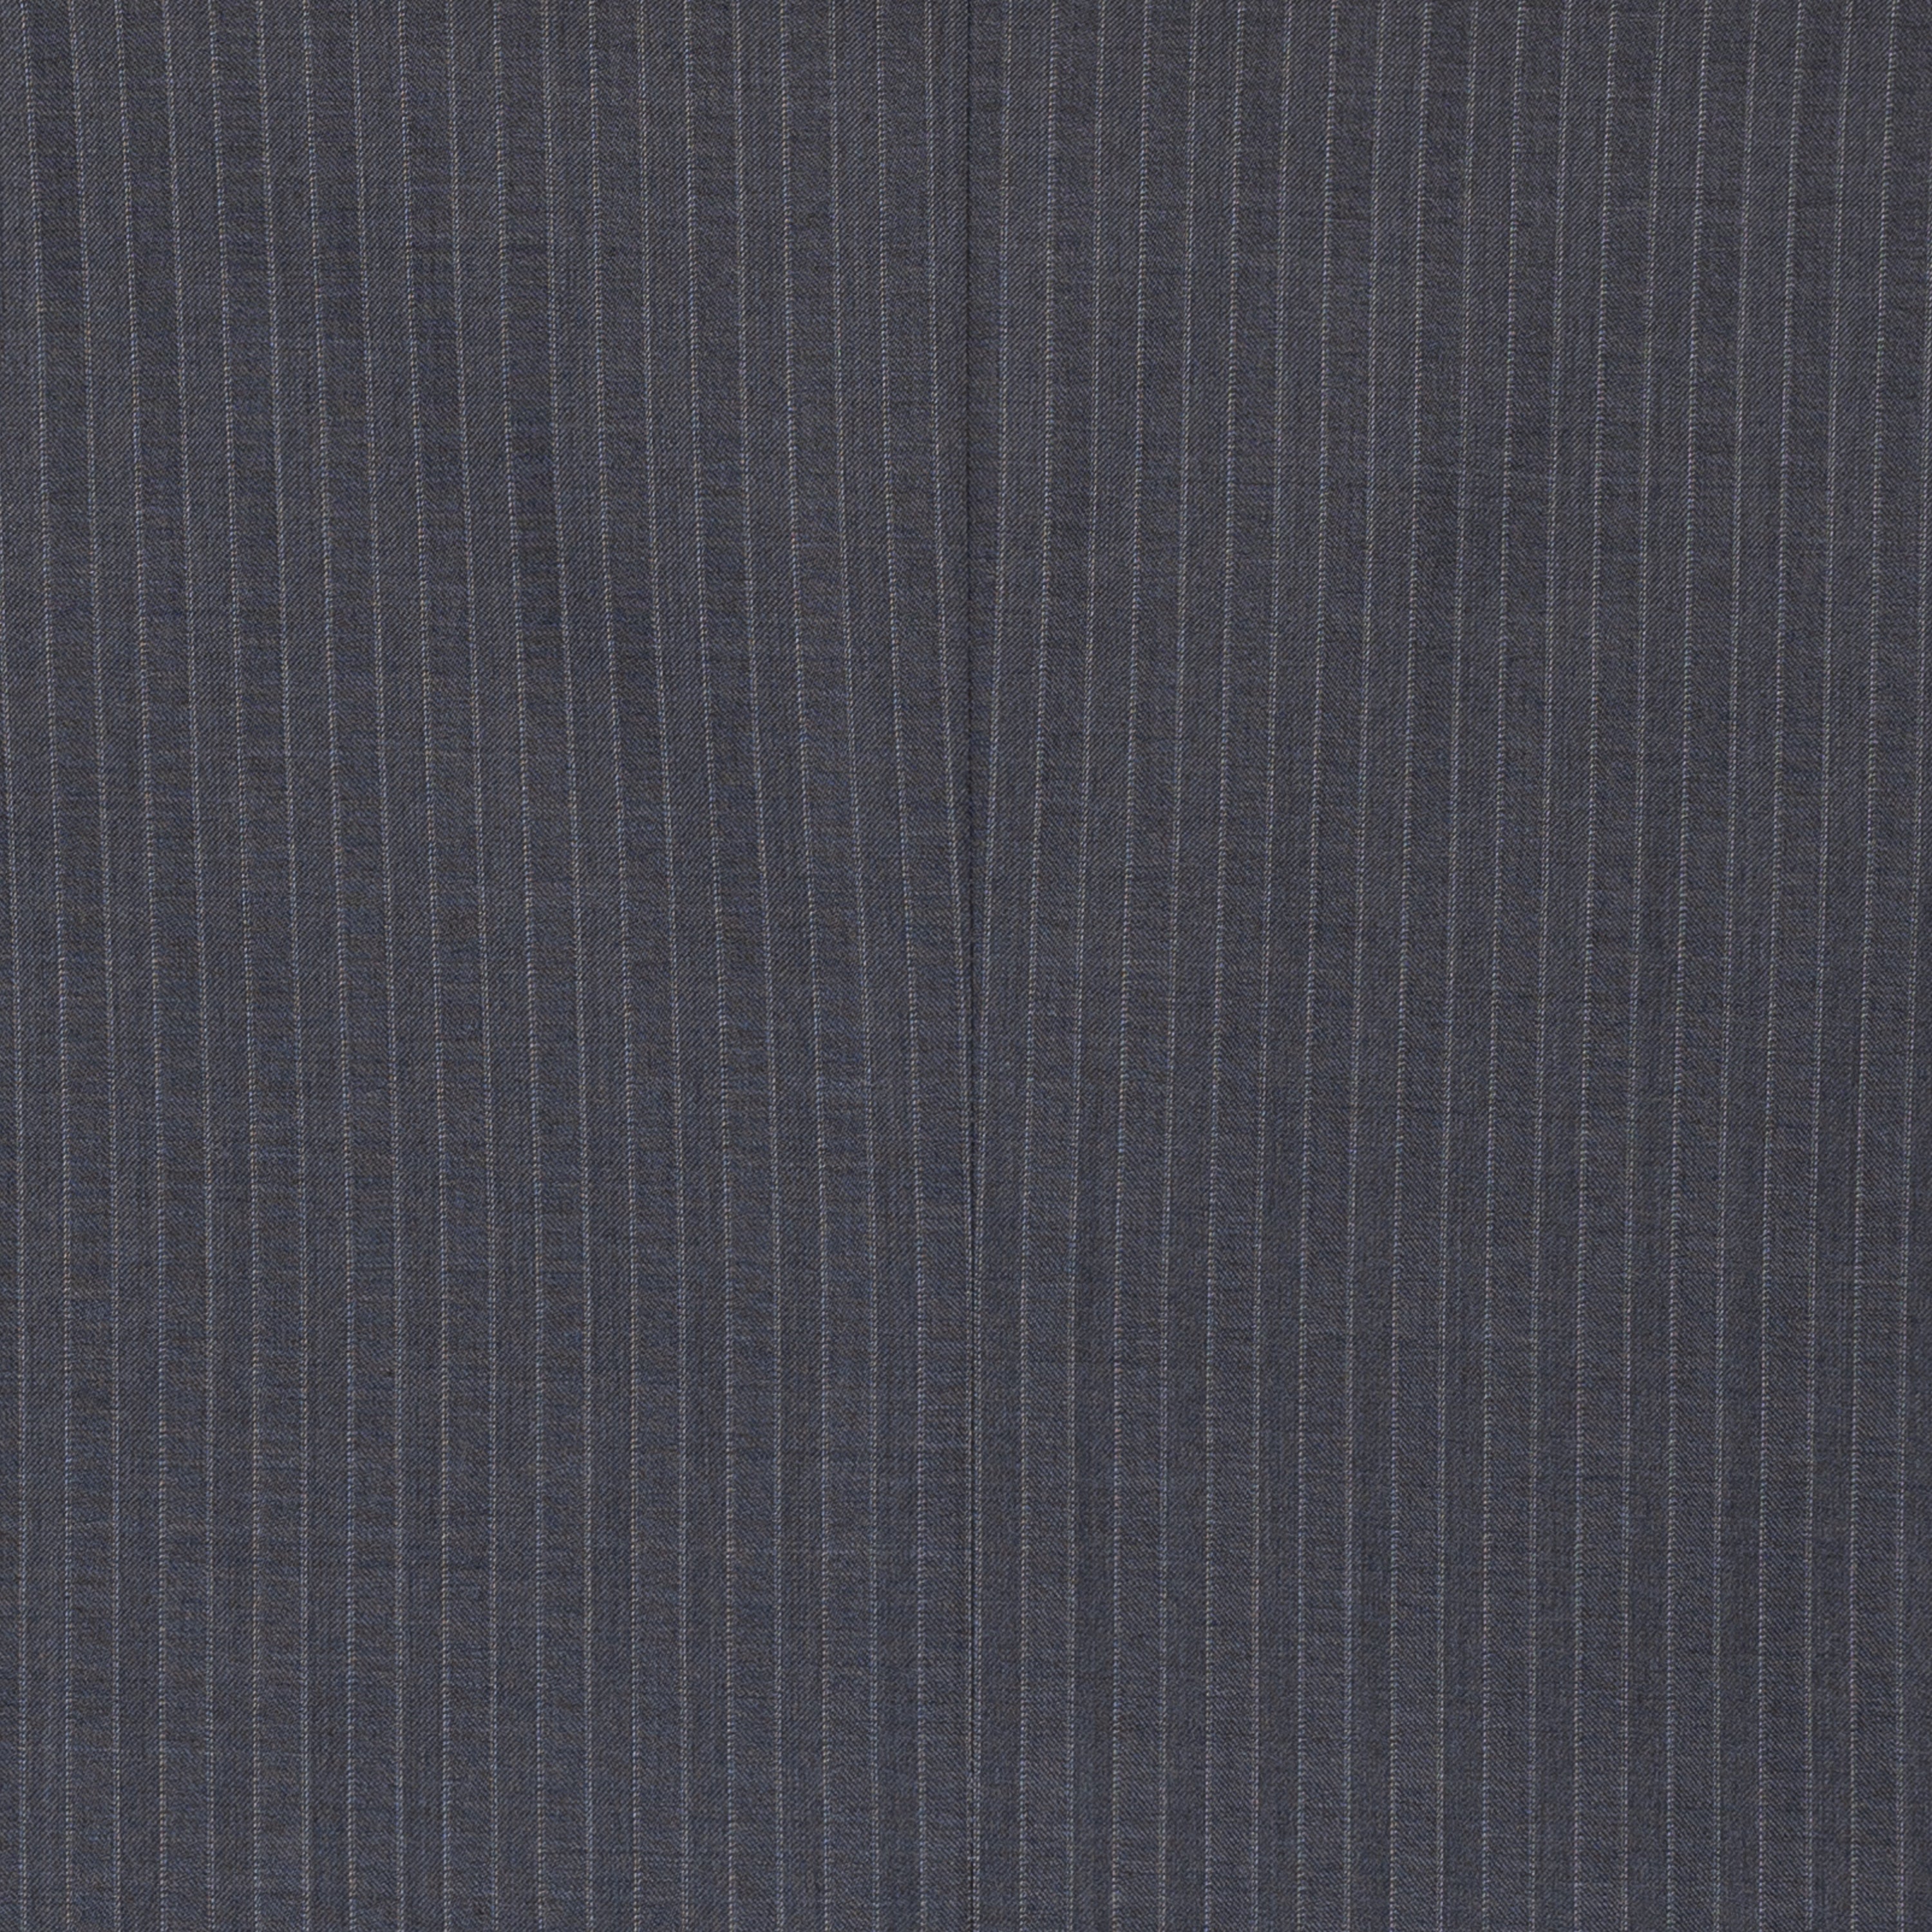 Sartoria CASTANGIA 1850 Gray Striped Wool Super 140's Suit EU 50 NEW US 40 CASTANGIA